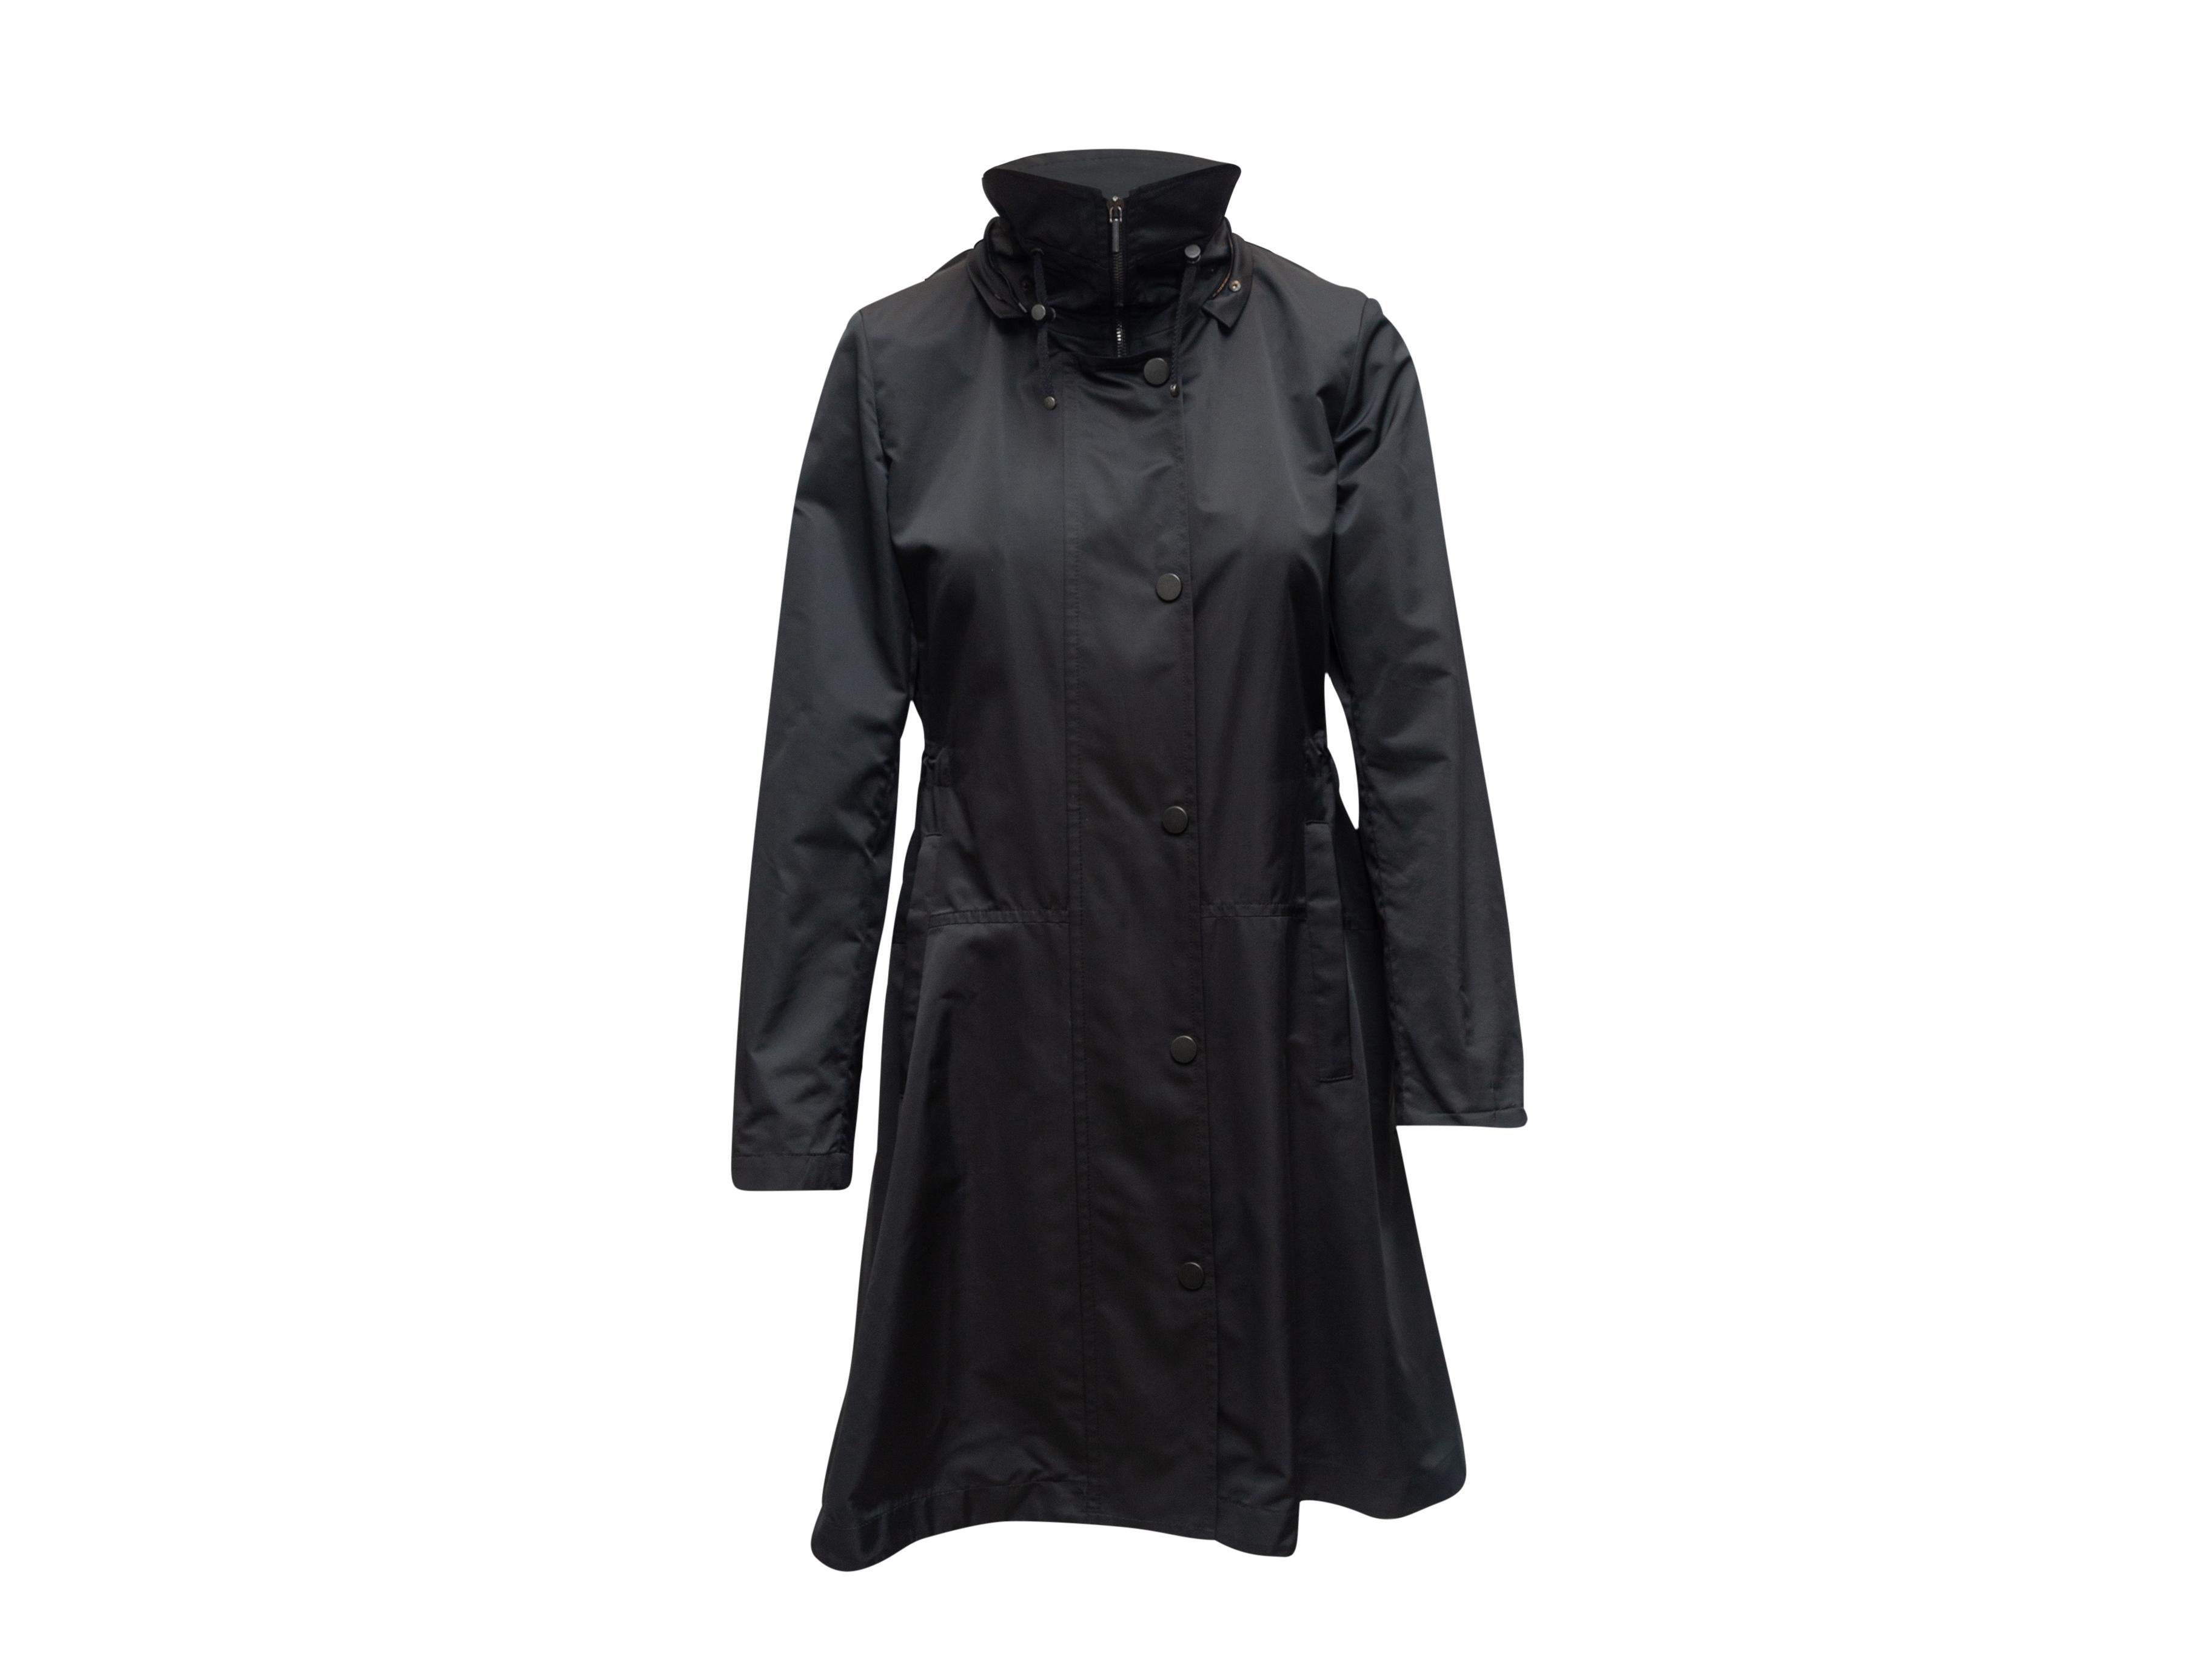 Product details: Black long nylon windbreaker jacket by Akris Punto. Fold collar. Dual hip pockets. Closures at front. 33